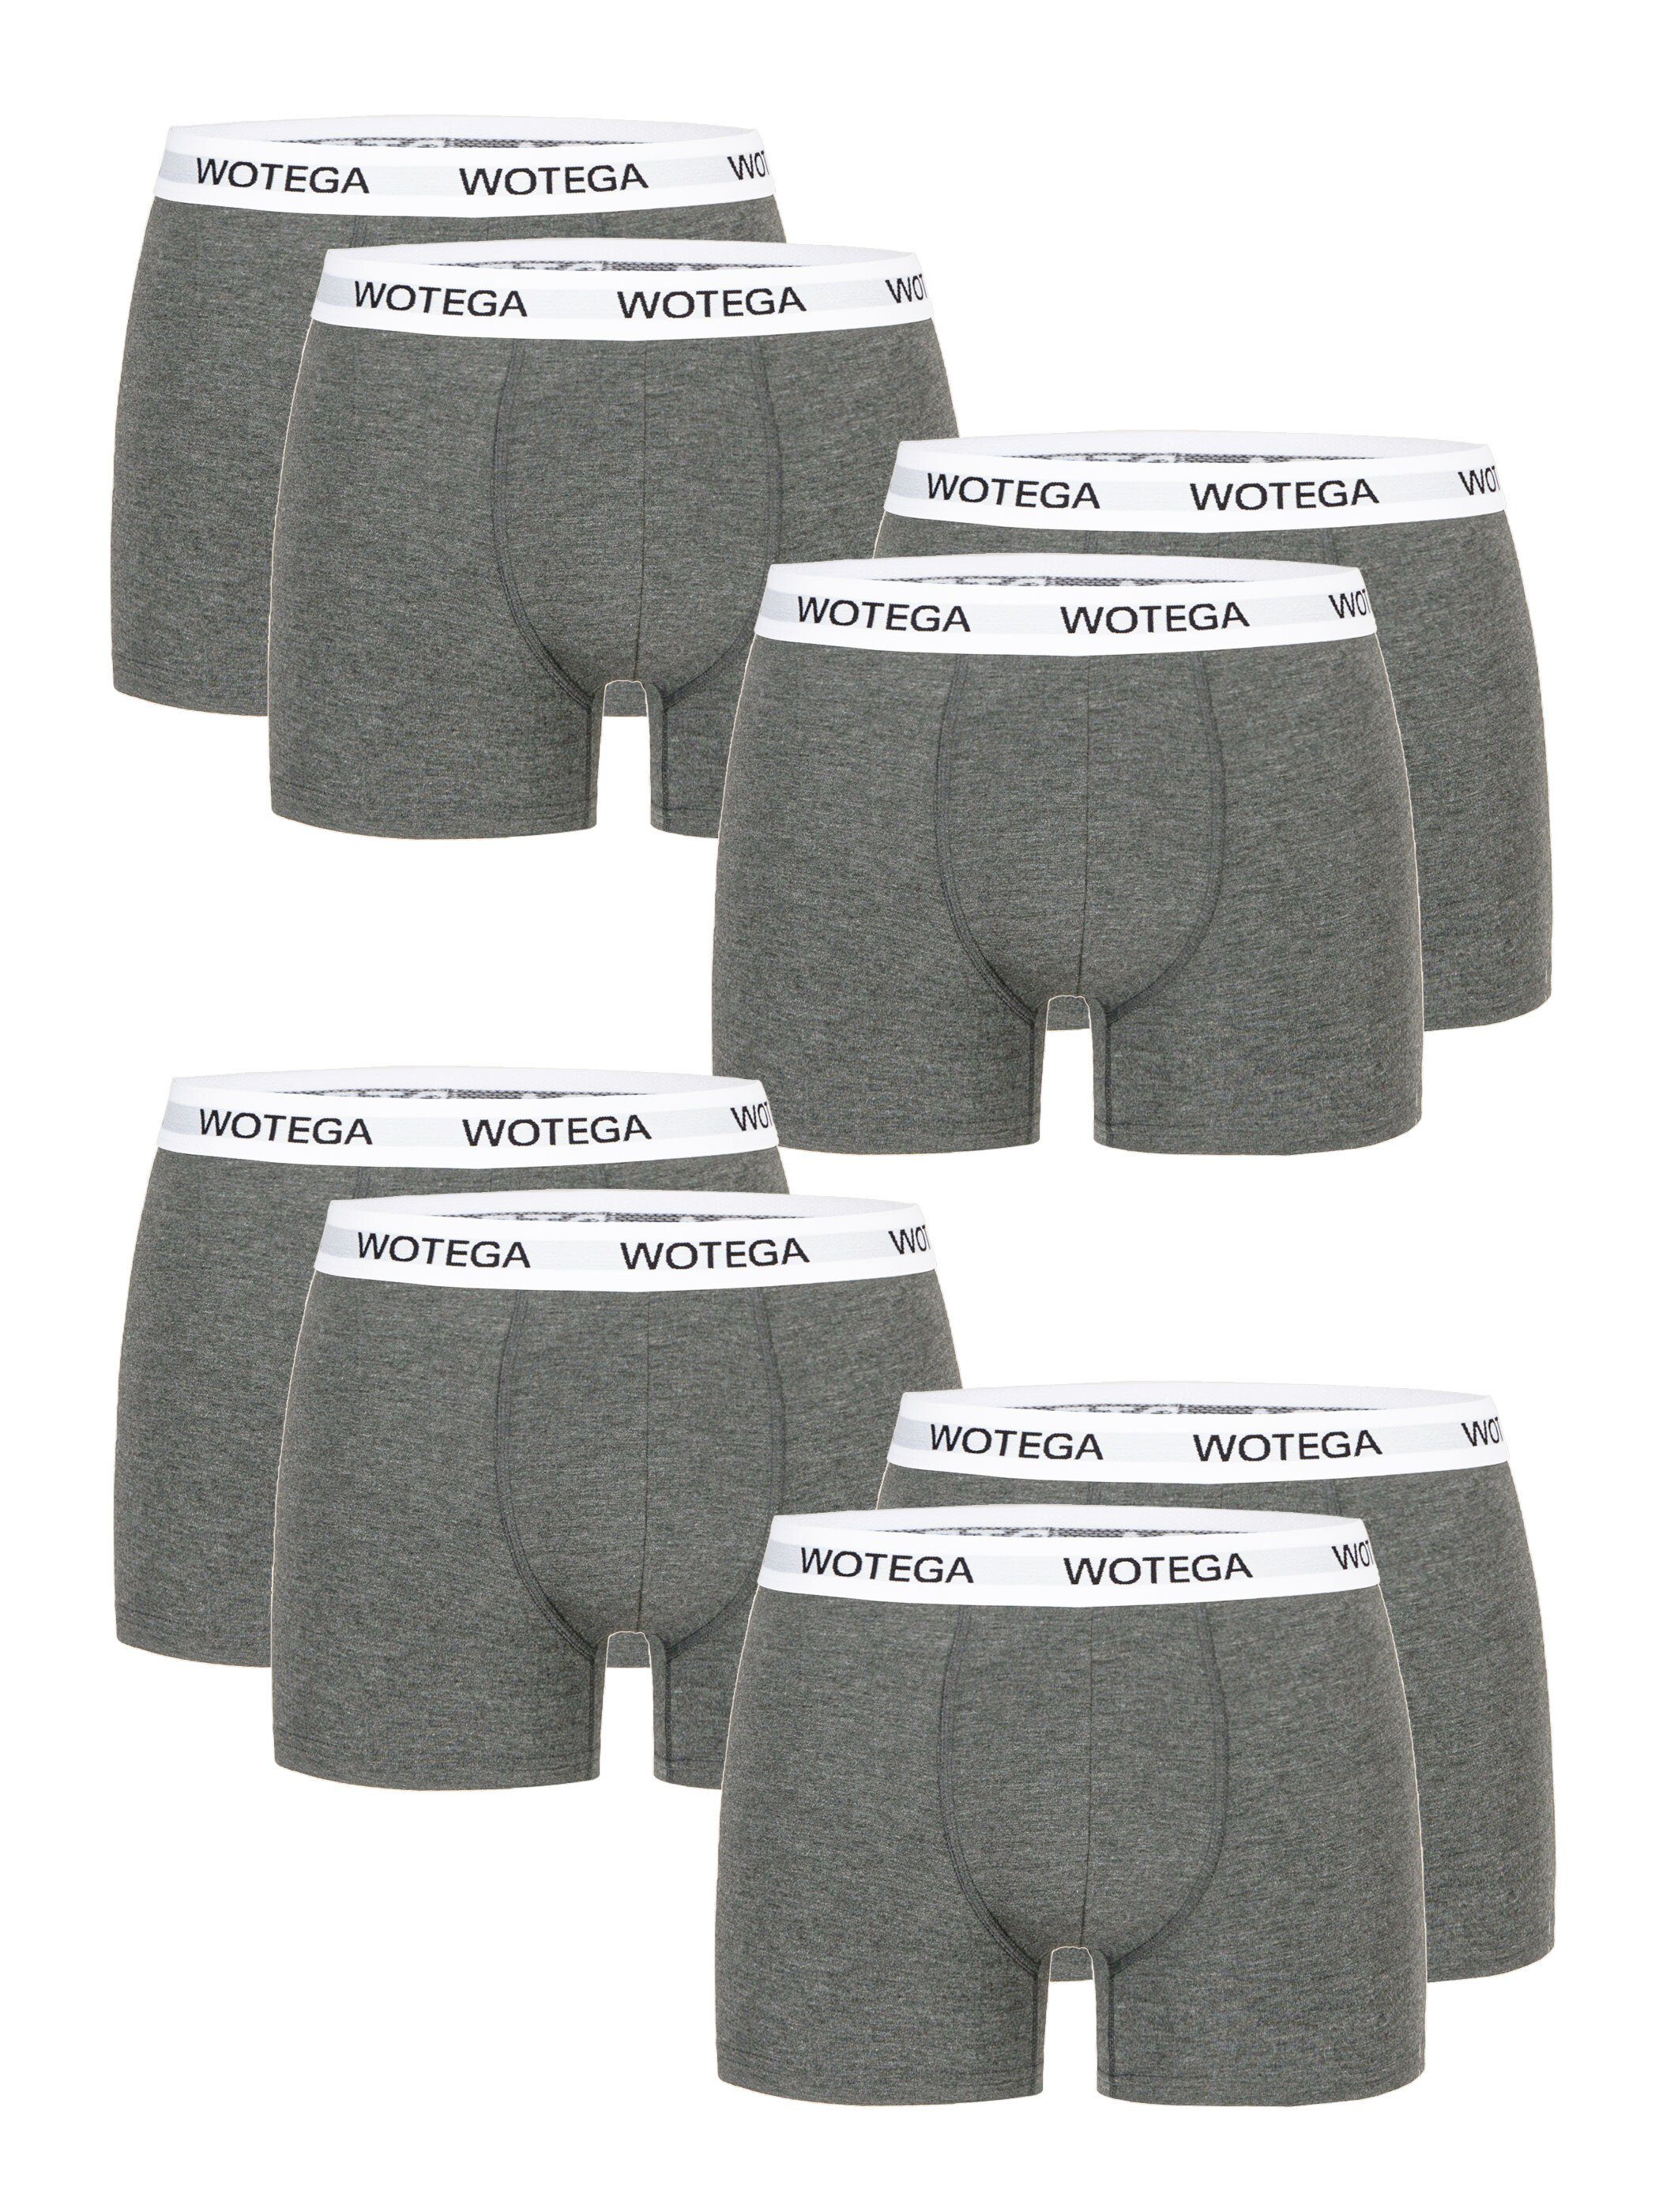 WOTEGA Boxershorts Joe (Spar-Set, 8er-Pack) moderne Baumwoll Unterhosen exklusiv im 8er Pack Grau (Phantom 194205)